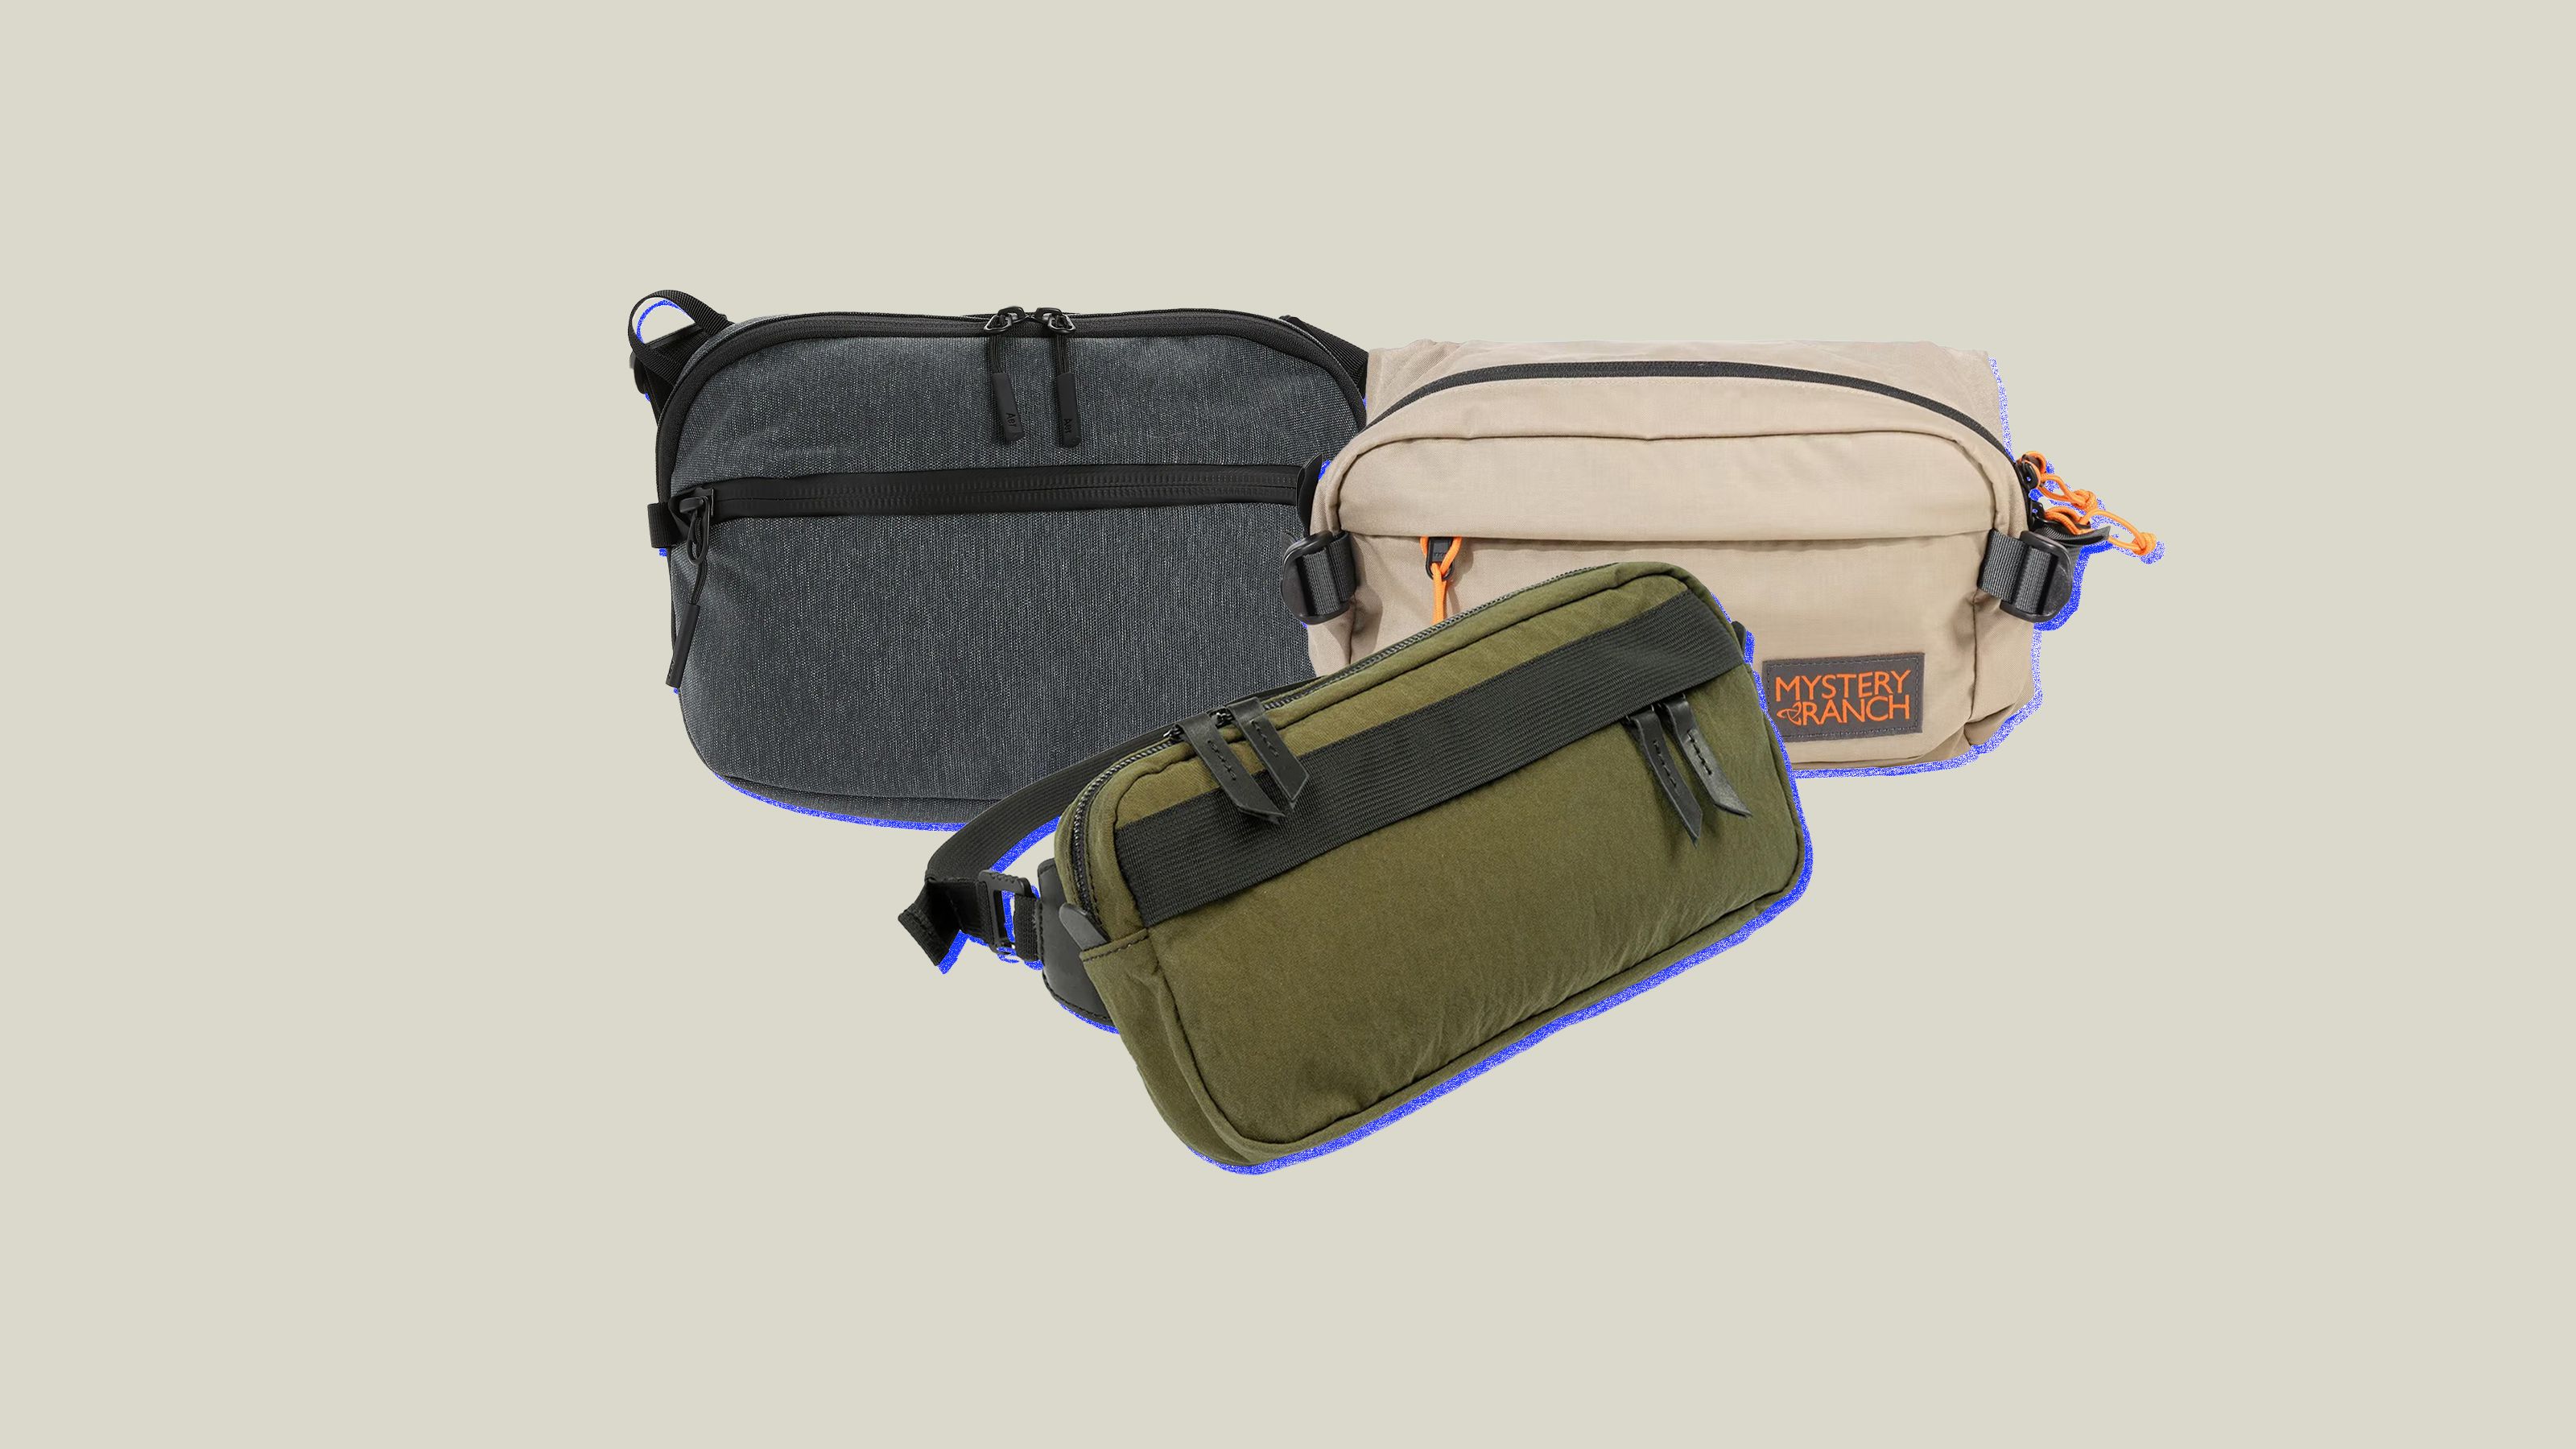 Men's Handbags Designer Bags, Wallets & Cases